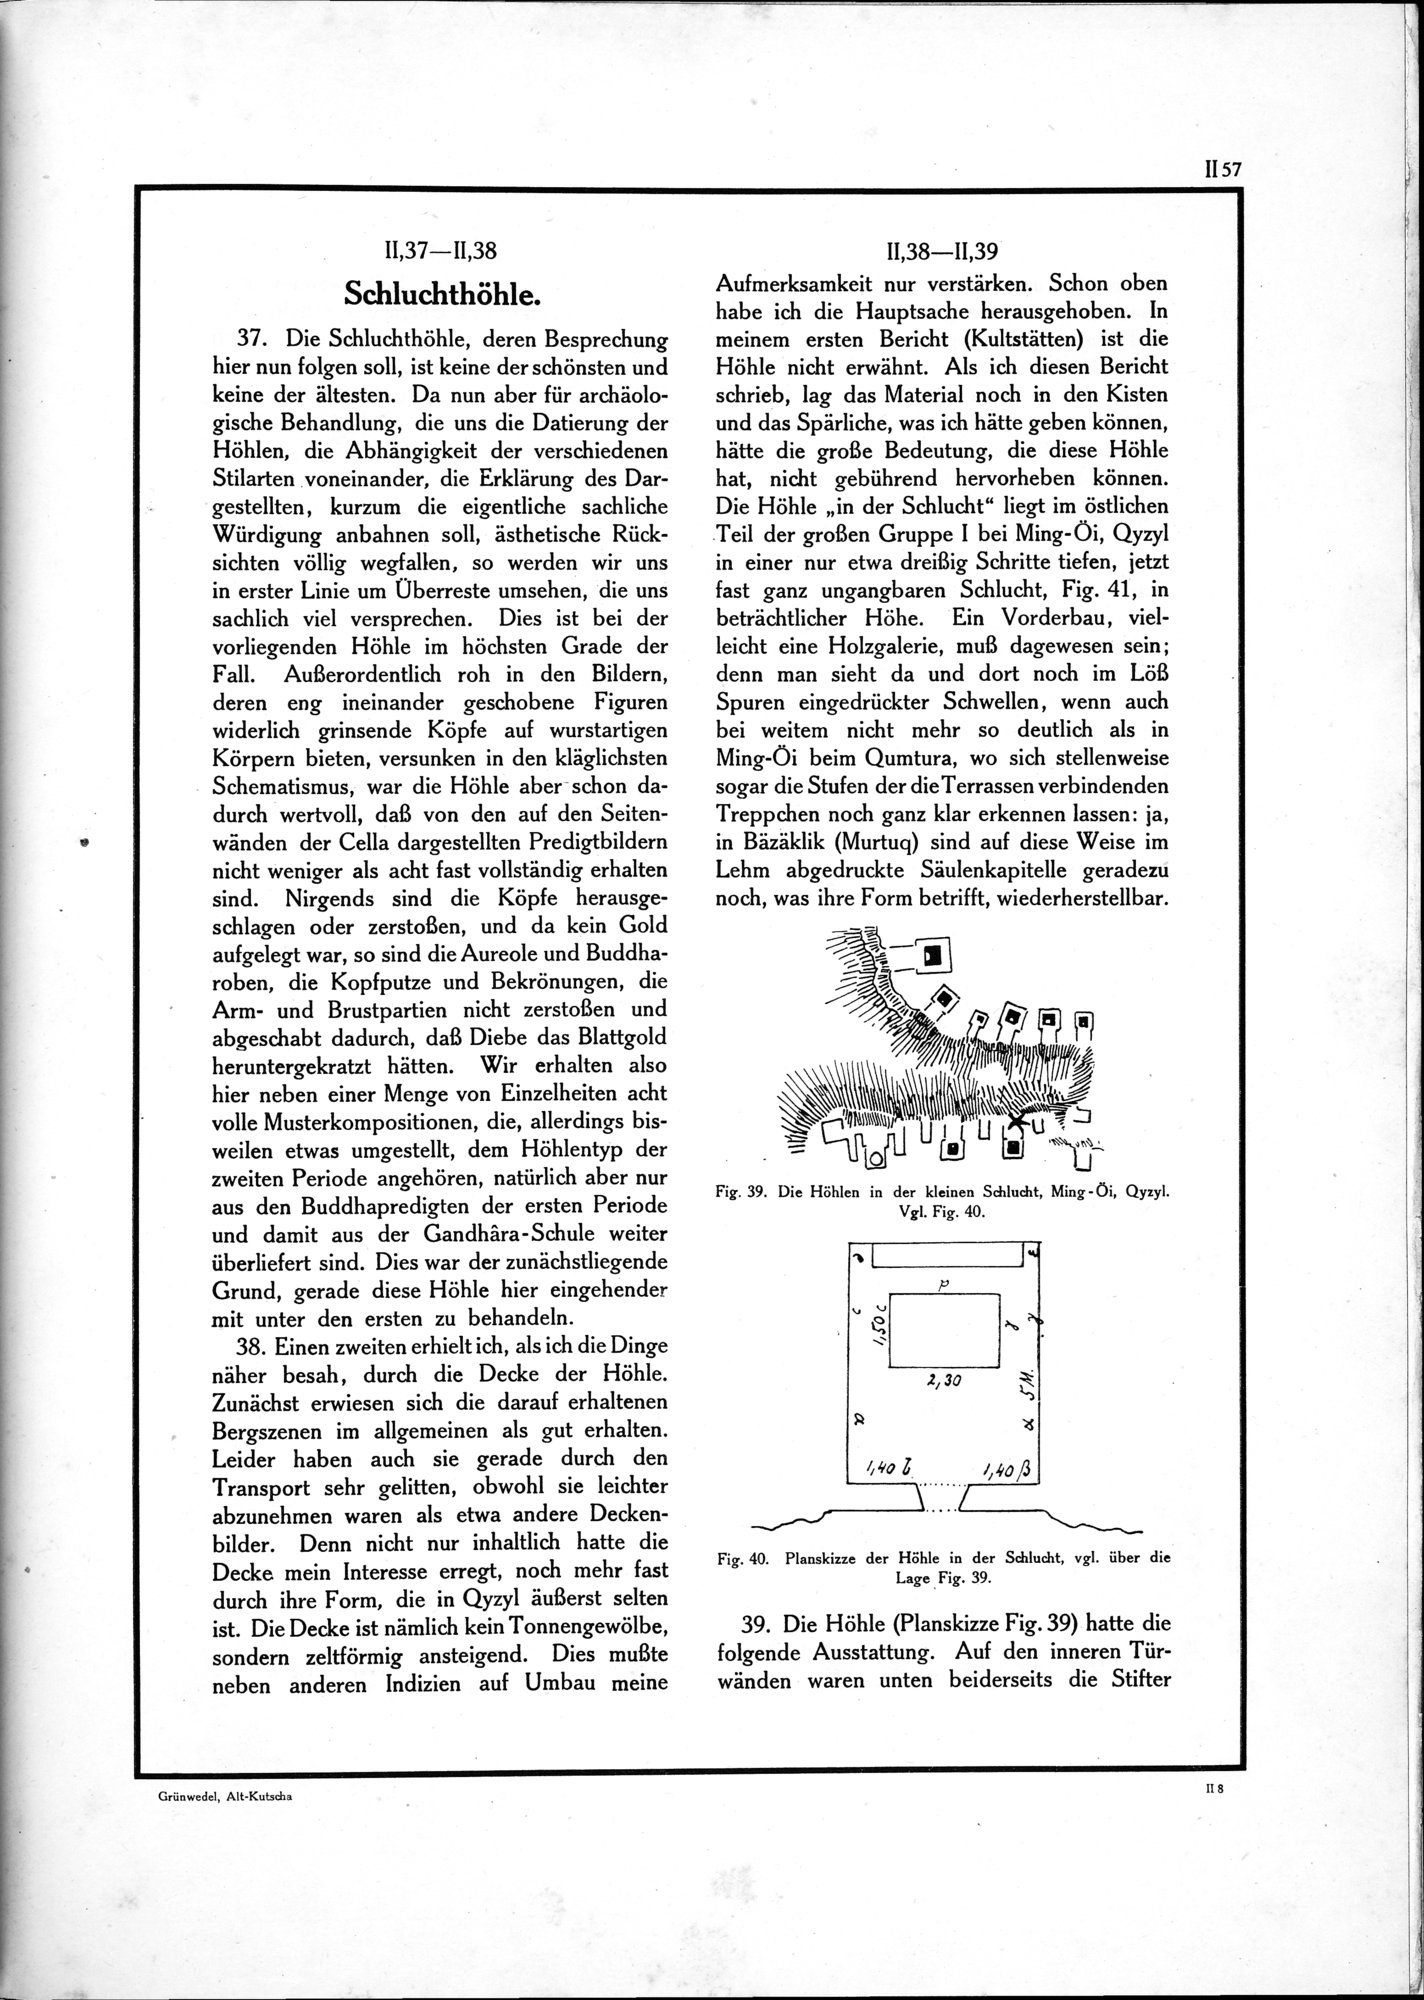 Alt-Kutscha : vol.1 / Page 167 (Grayscale High Resolution Image)